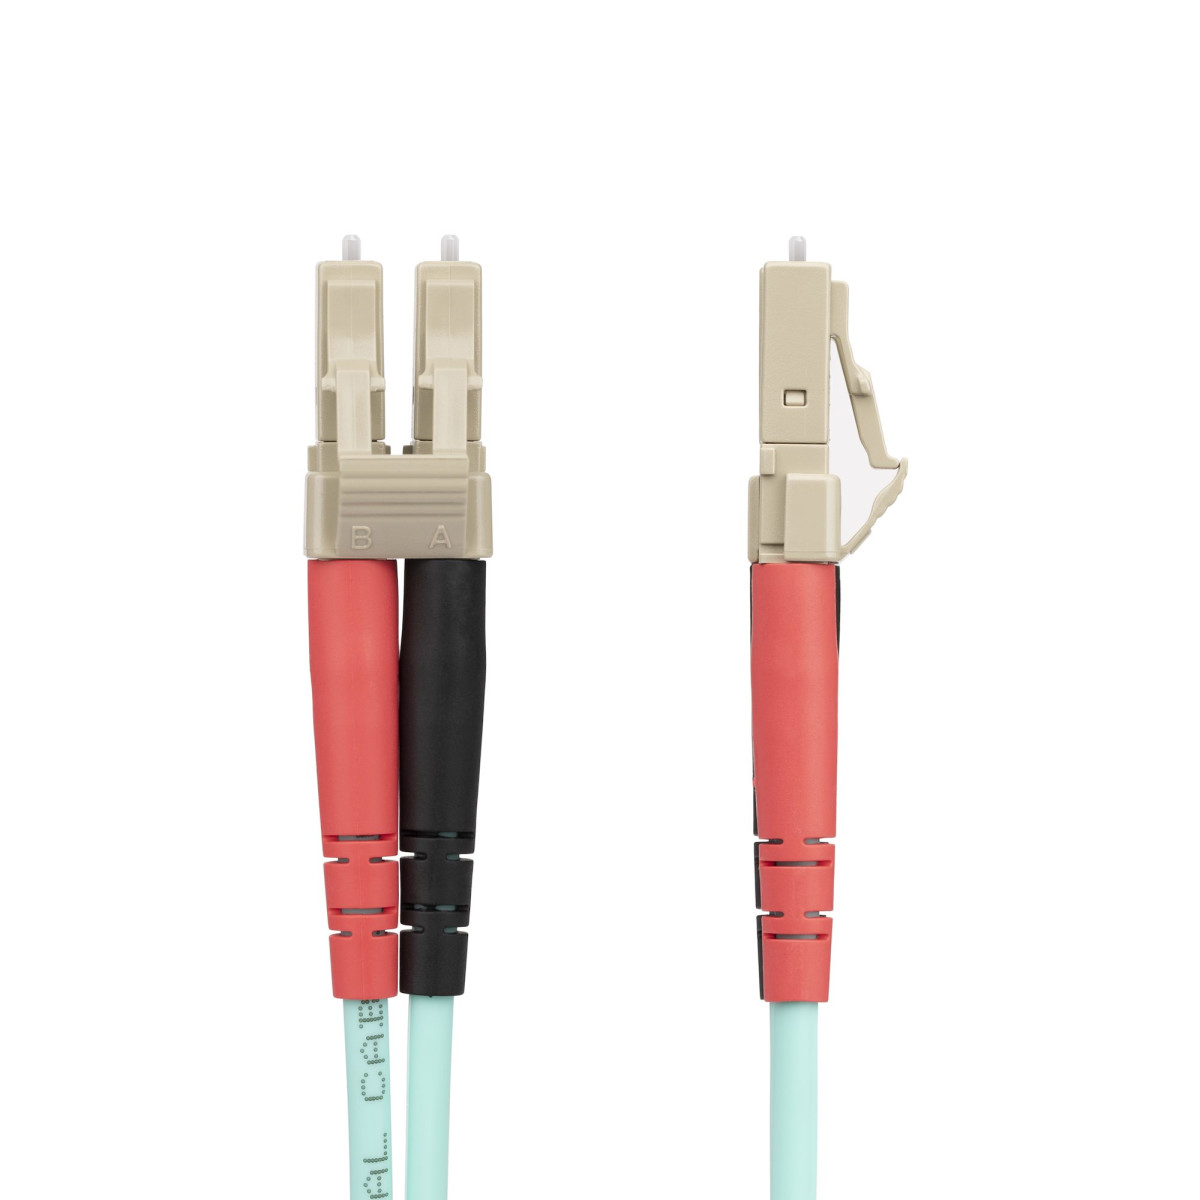 20m LC/UPC OM4 Fiber Cable LSZH Cord